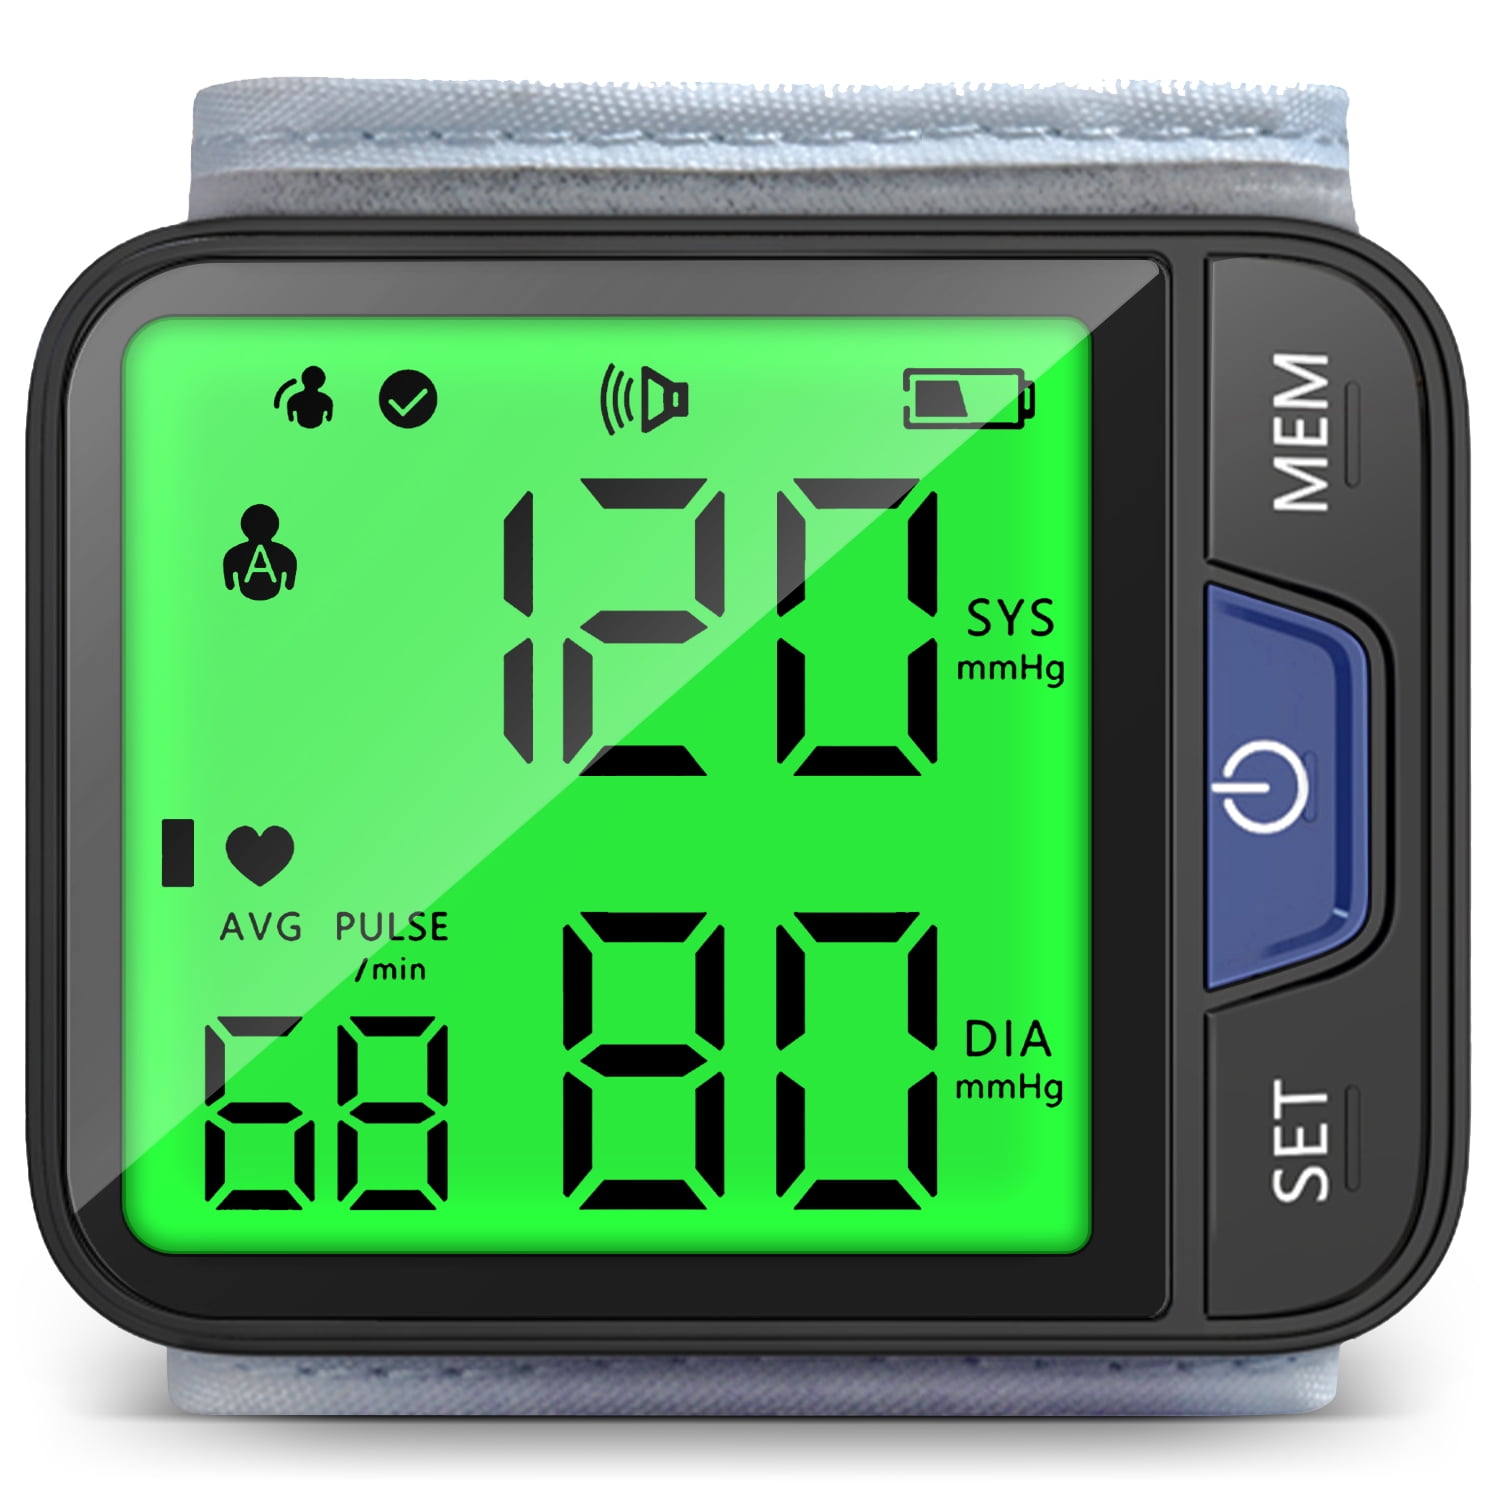 Alphagomed Upper Arm Electronic Blood Pressure Monitor Model U80R